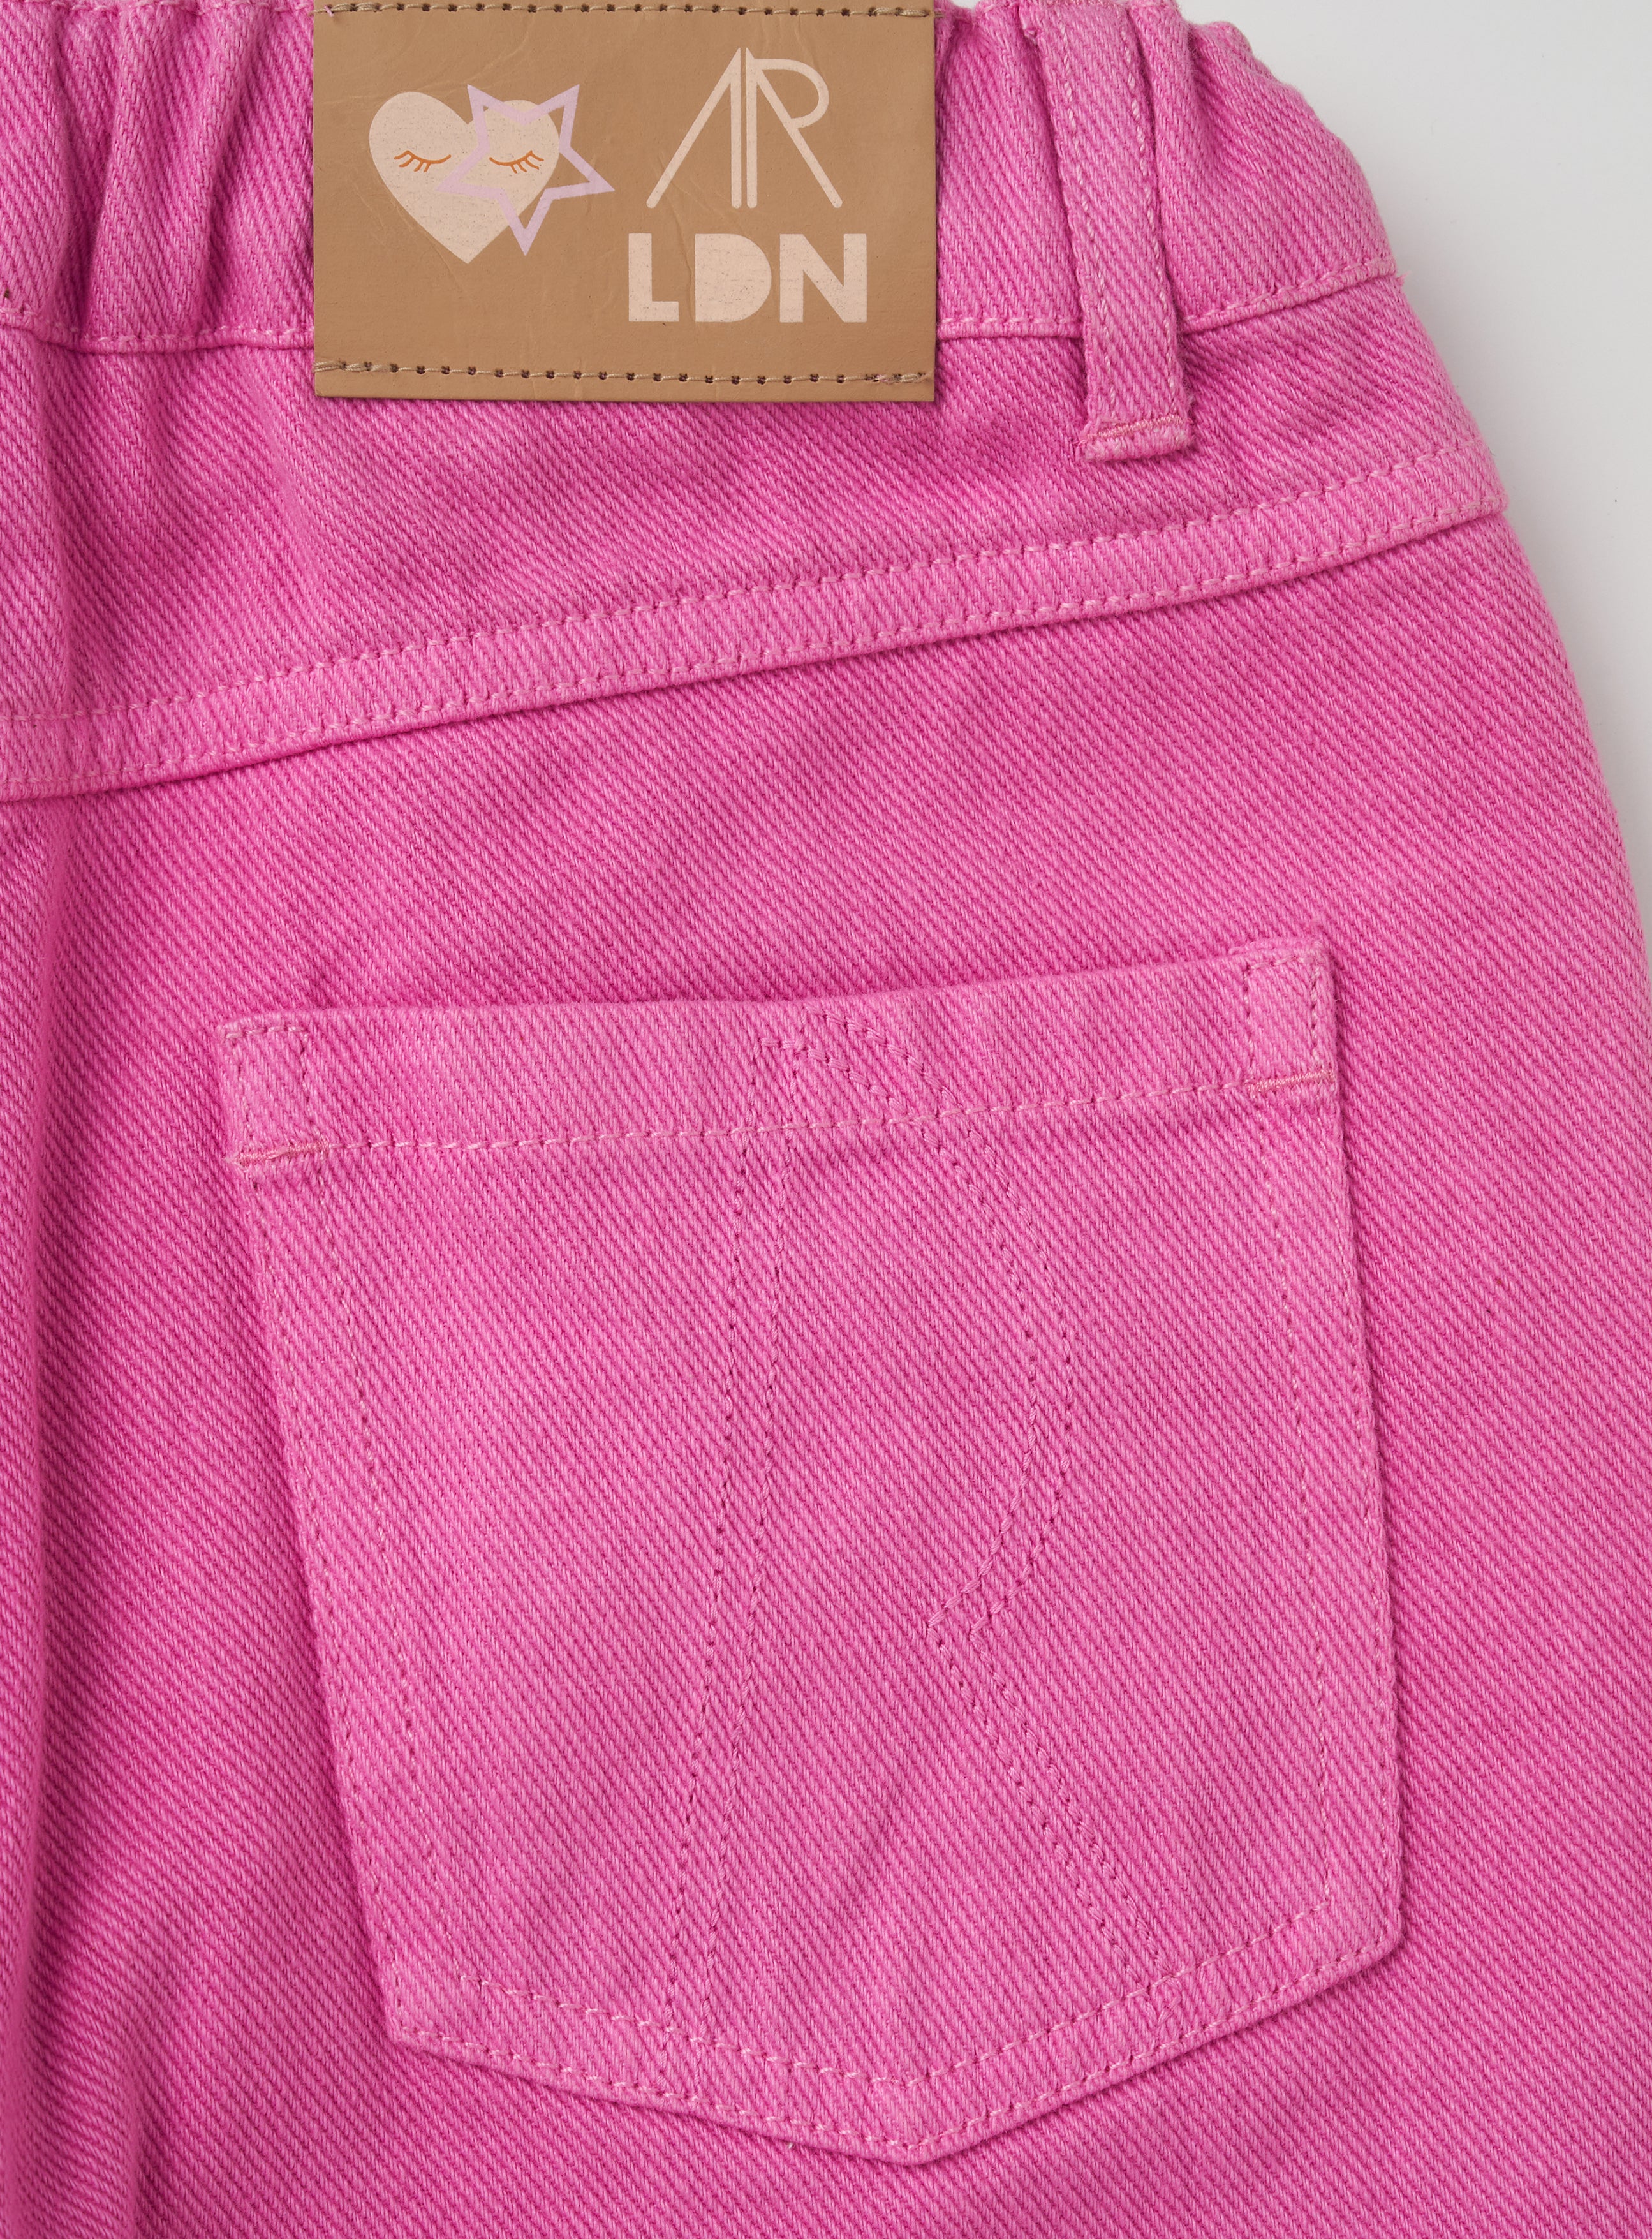 Girls Solid Pink Smart Denim Pants